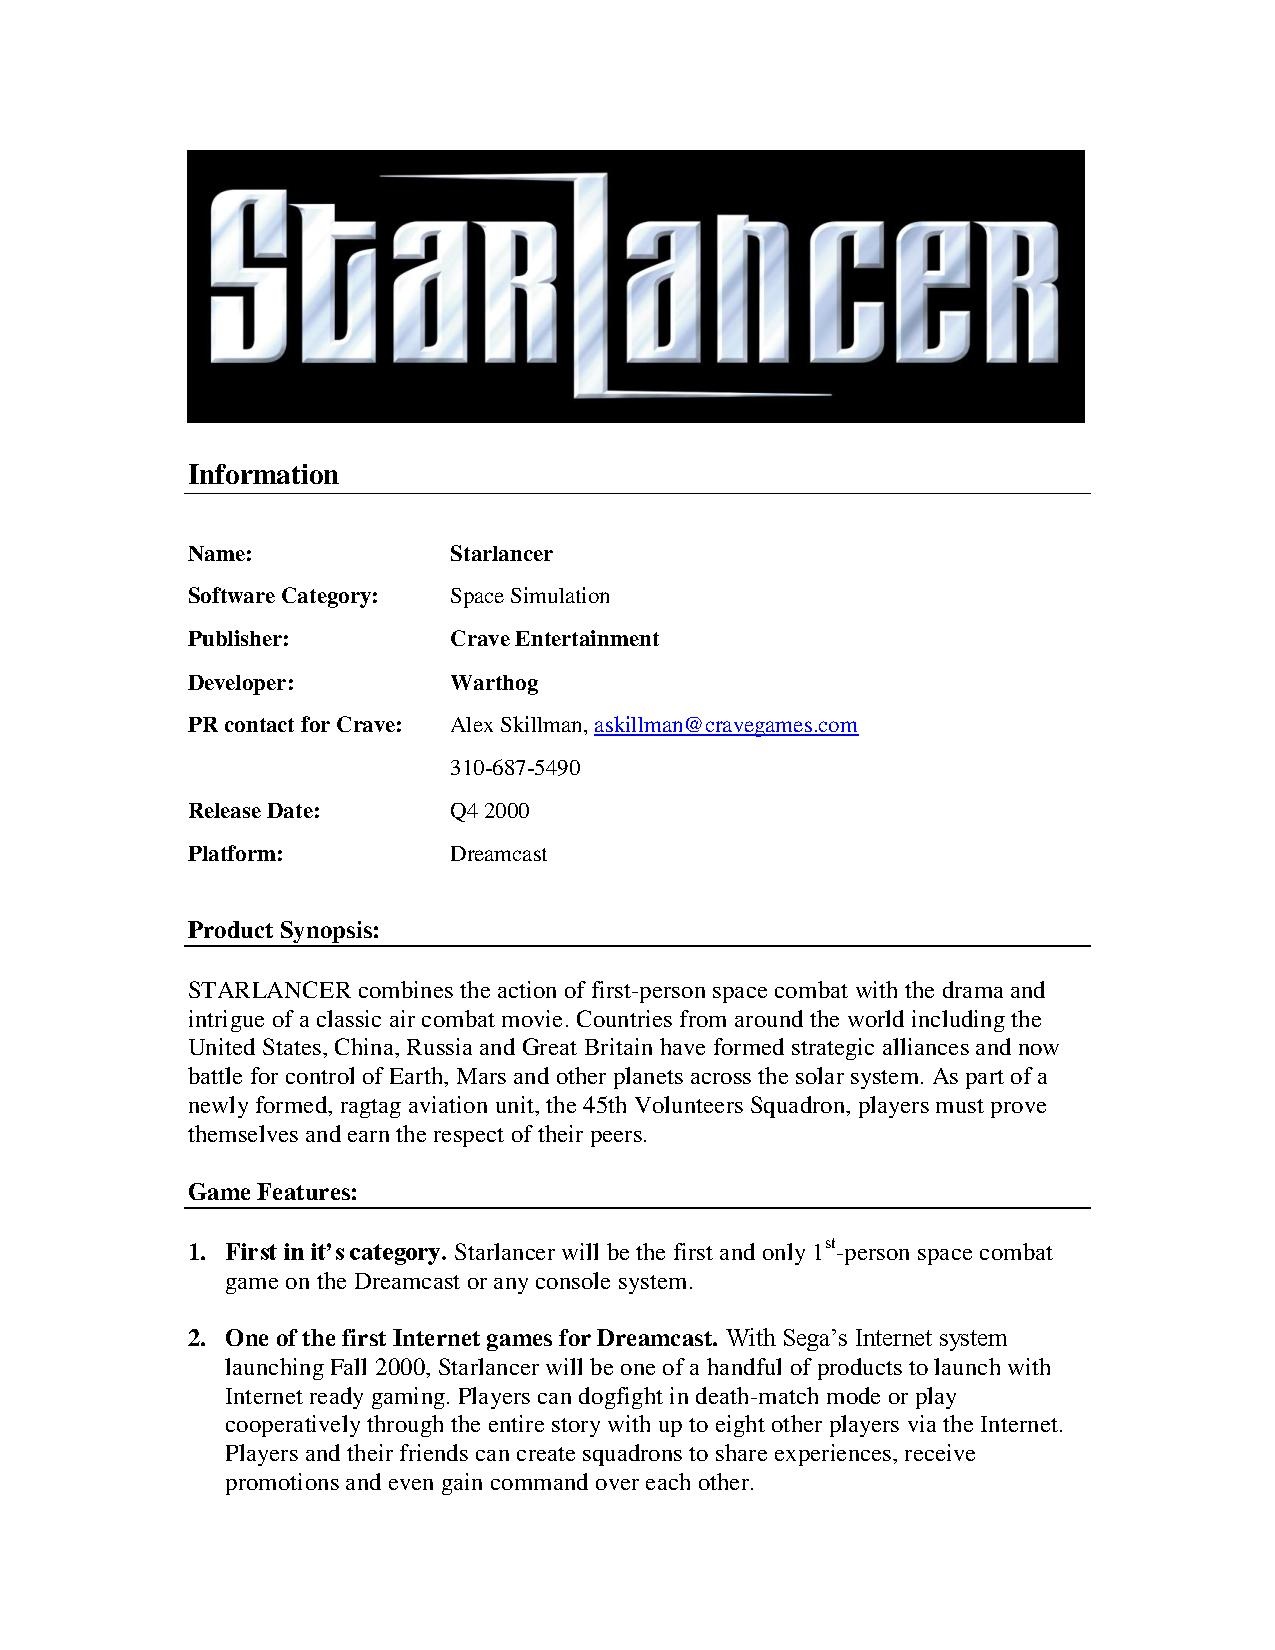 CraveEntertainment2000andBeyond Starlancer Starlancer Fact Sheet.pdf